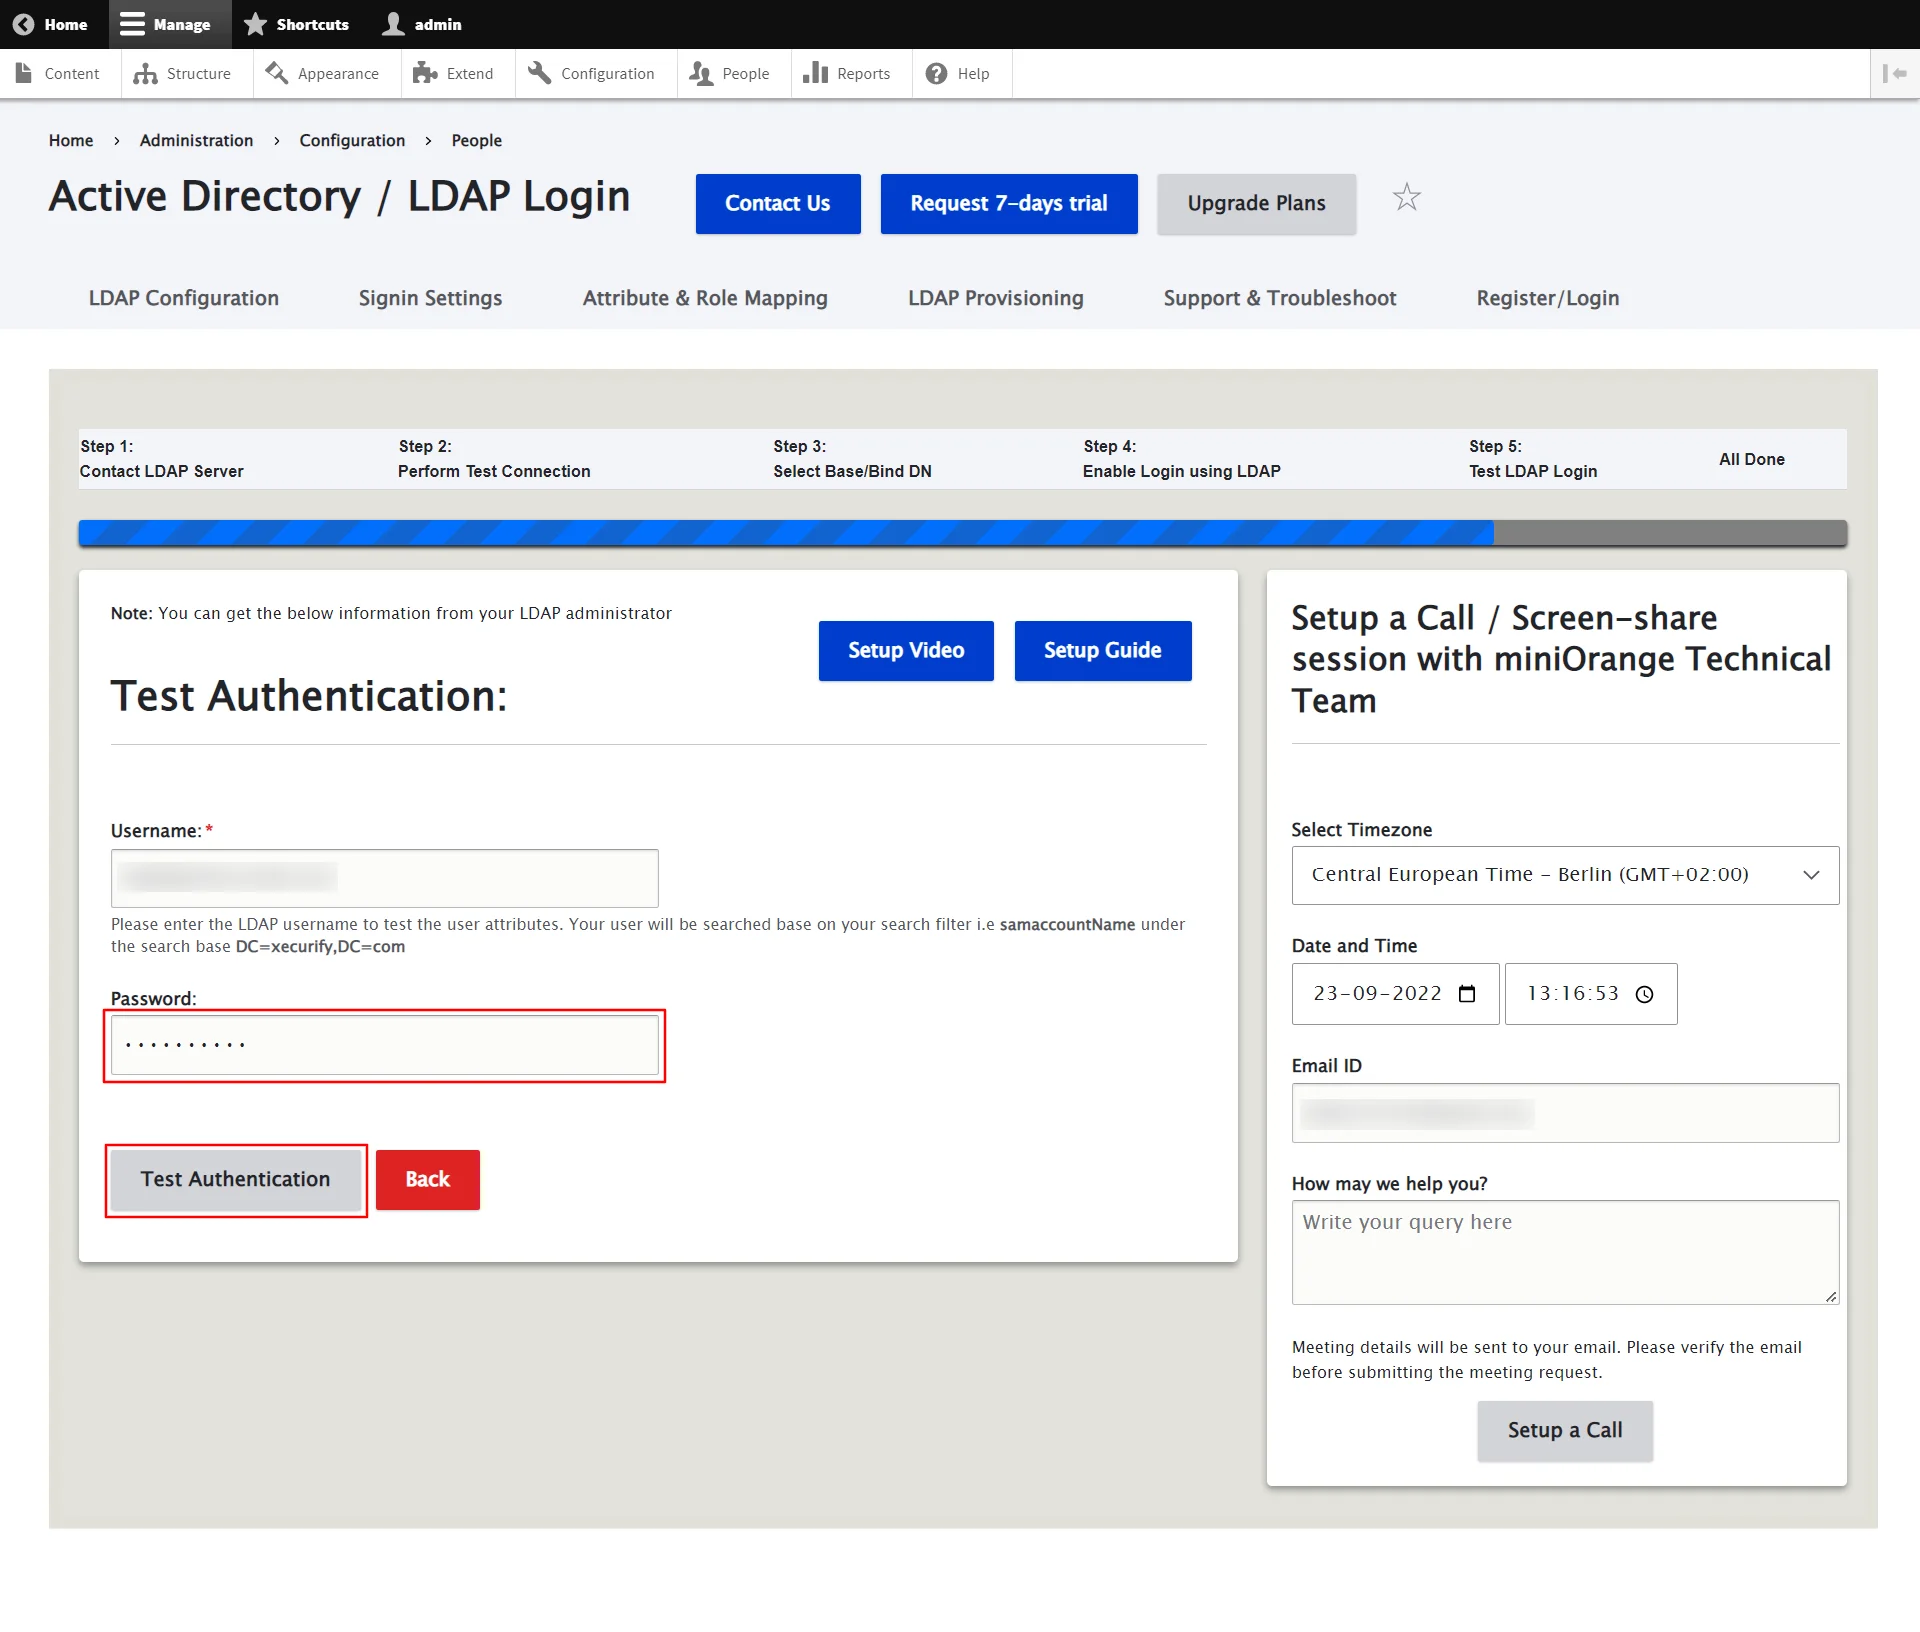 Drupal LDAP Login and Active Directory SSO - Test Authentication